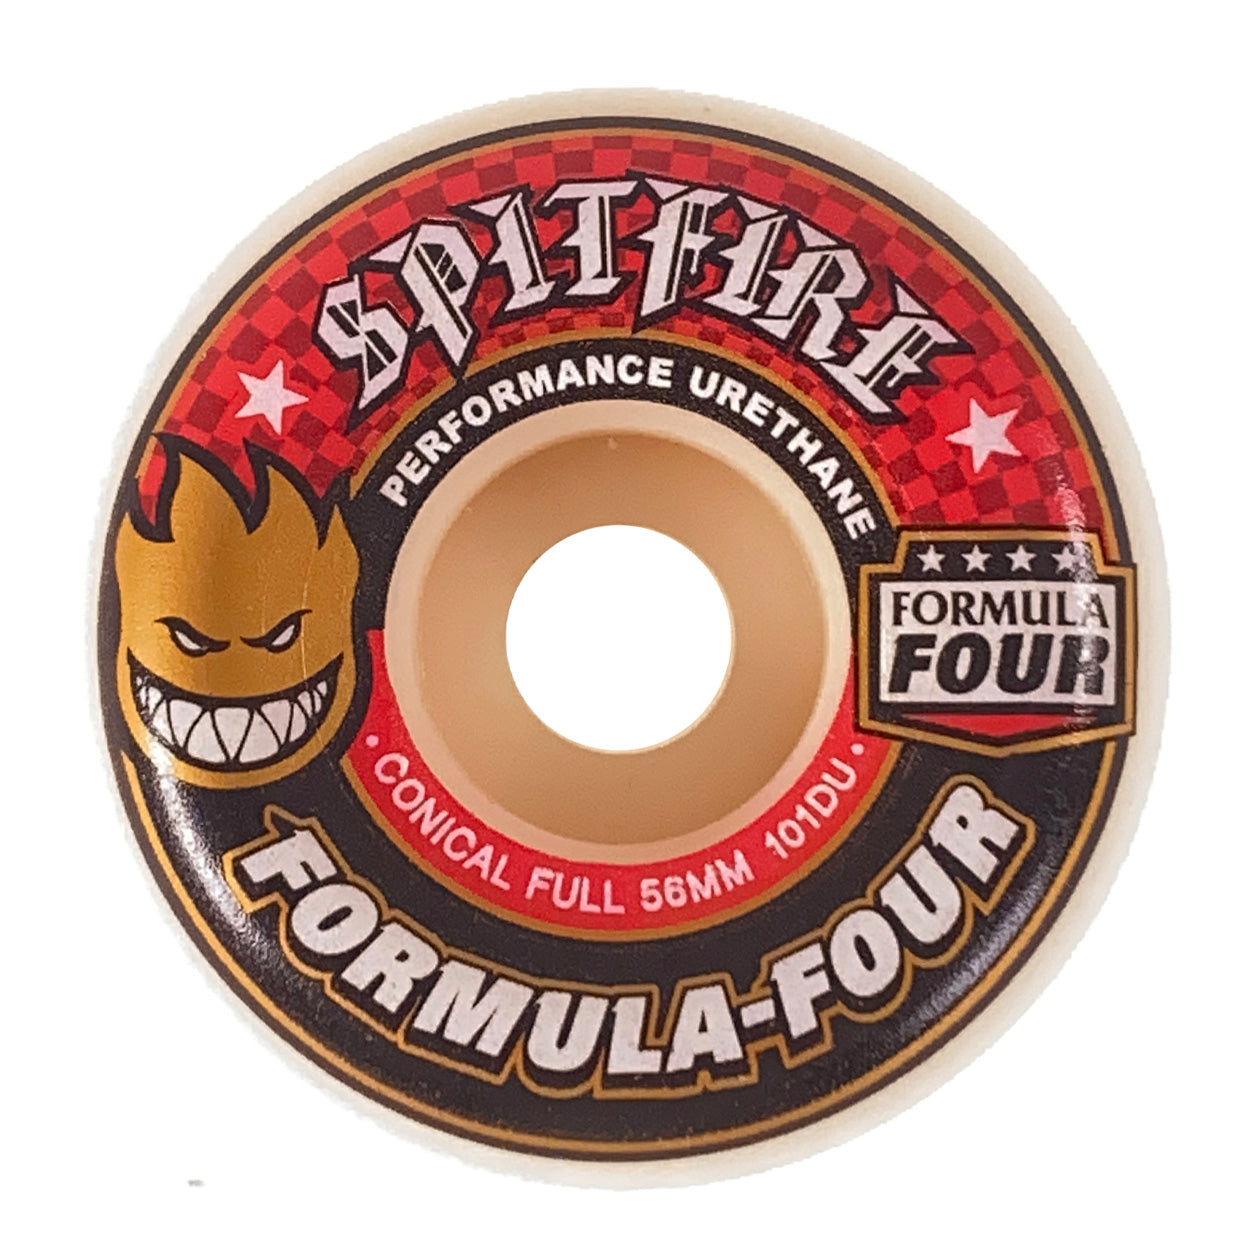 Spitfire - 56mm - 101DU Conical Full Formula Four Wheels - Natural - Prime Delux Store